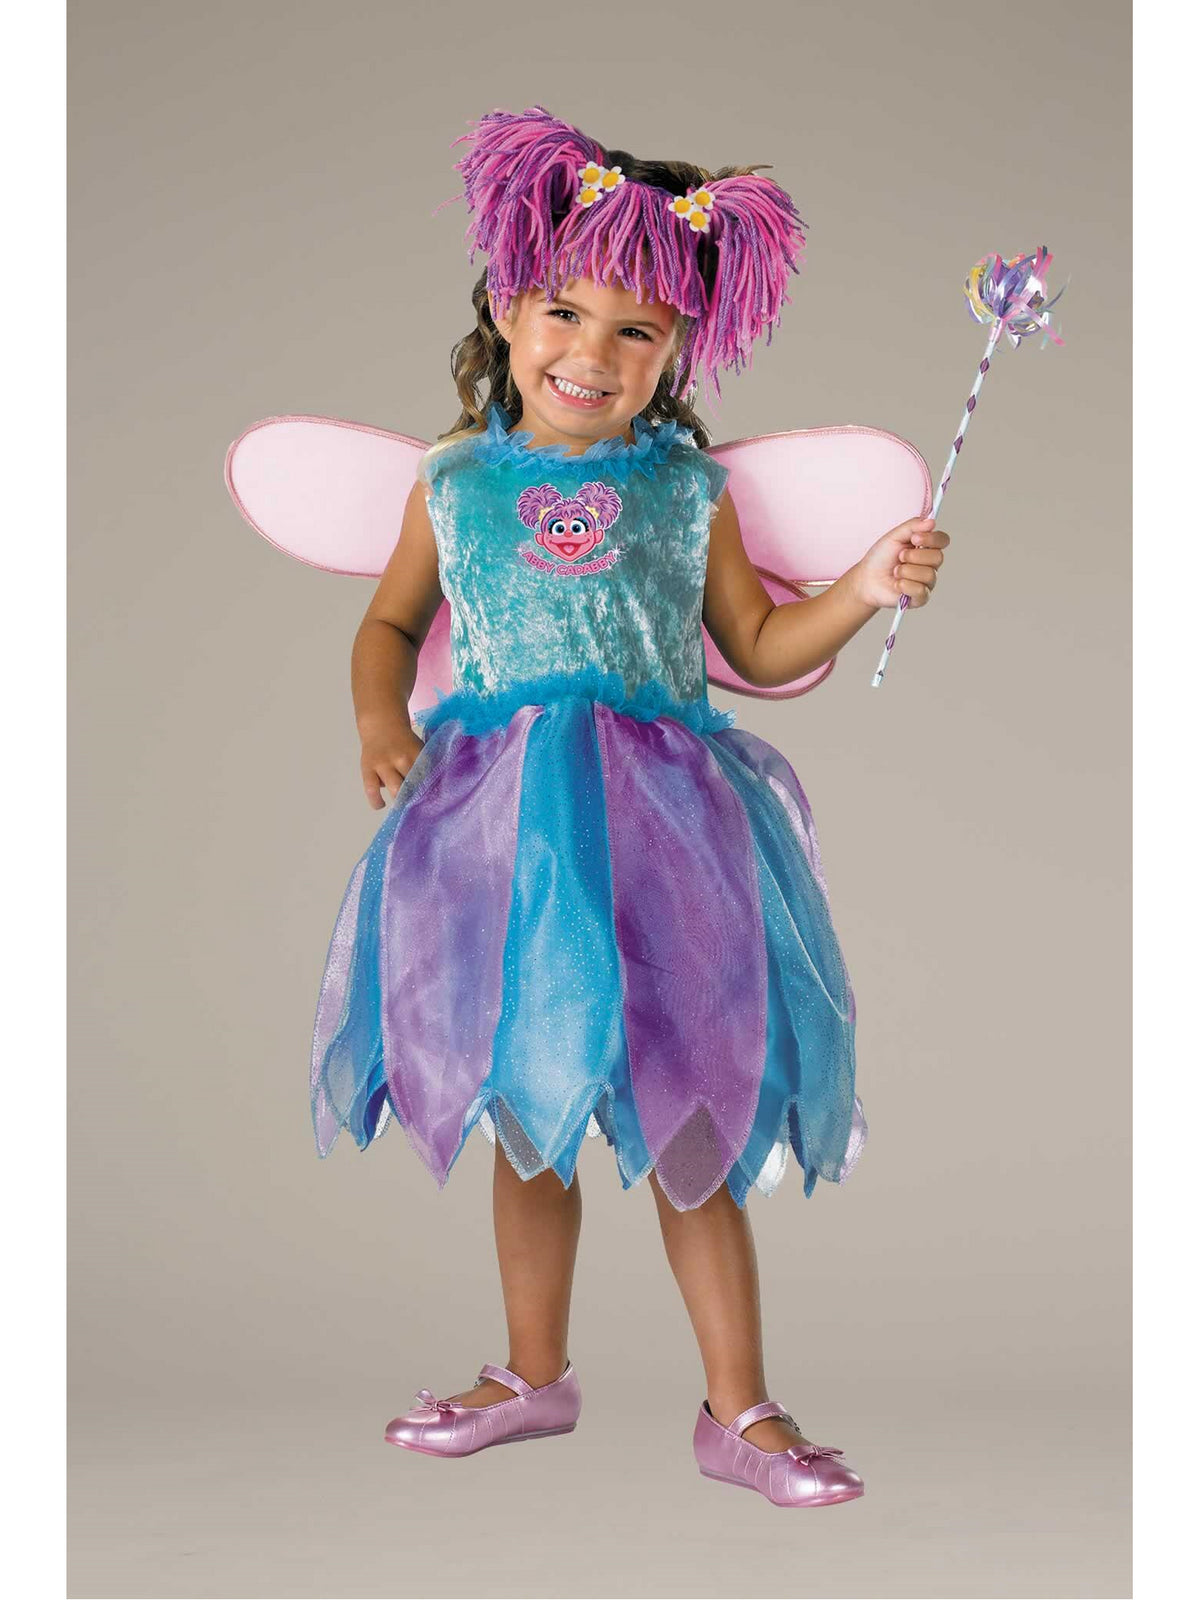 Abby Cadabby Costume for Girls - Chasing Fireflies